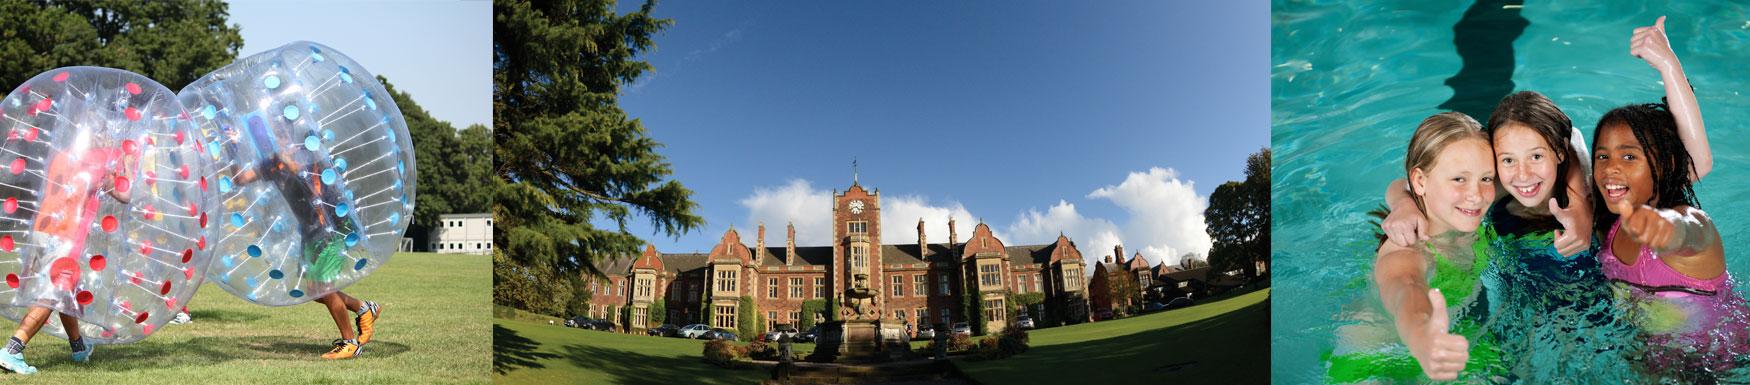 The Royal School, Wolverhampton